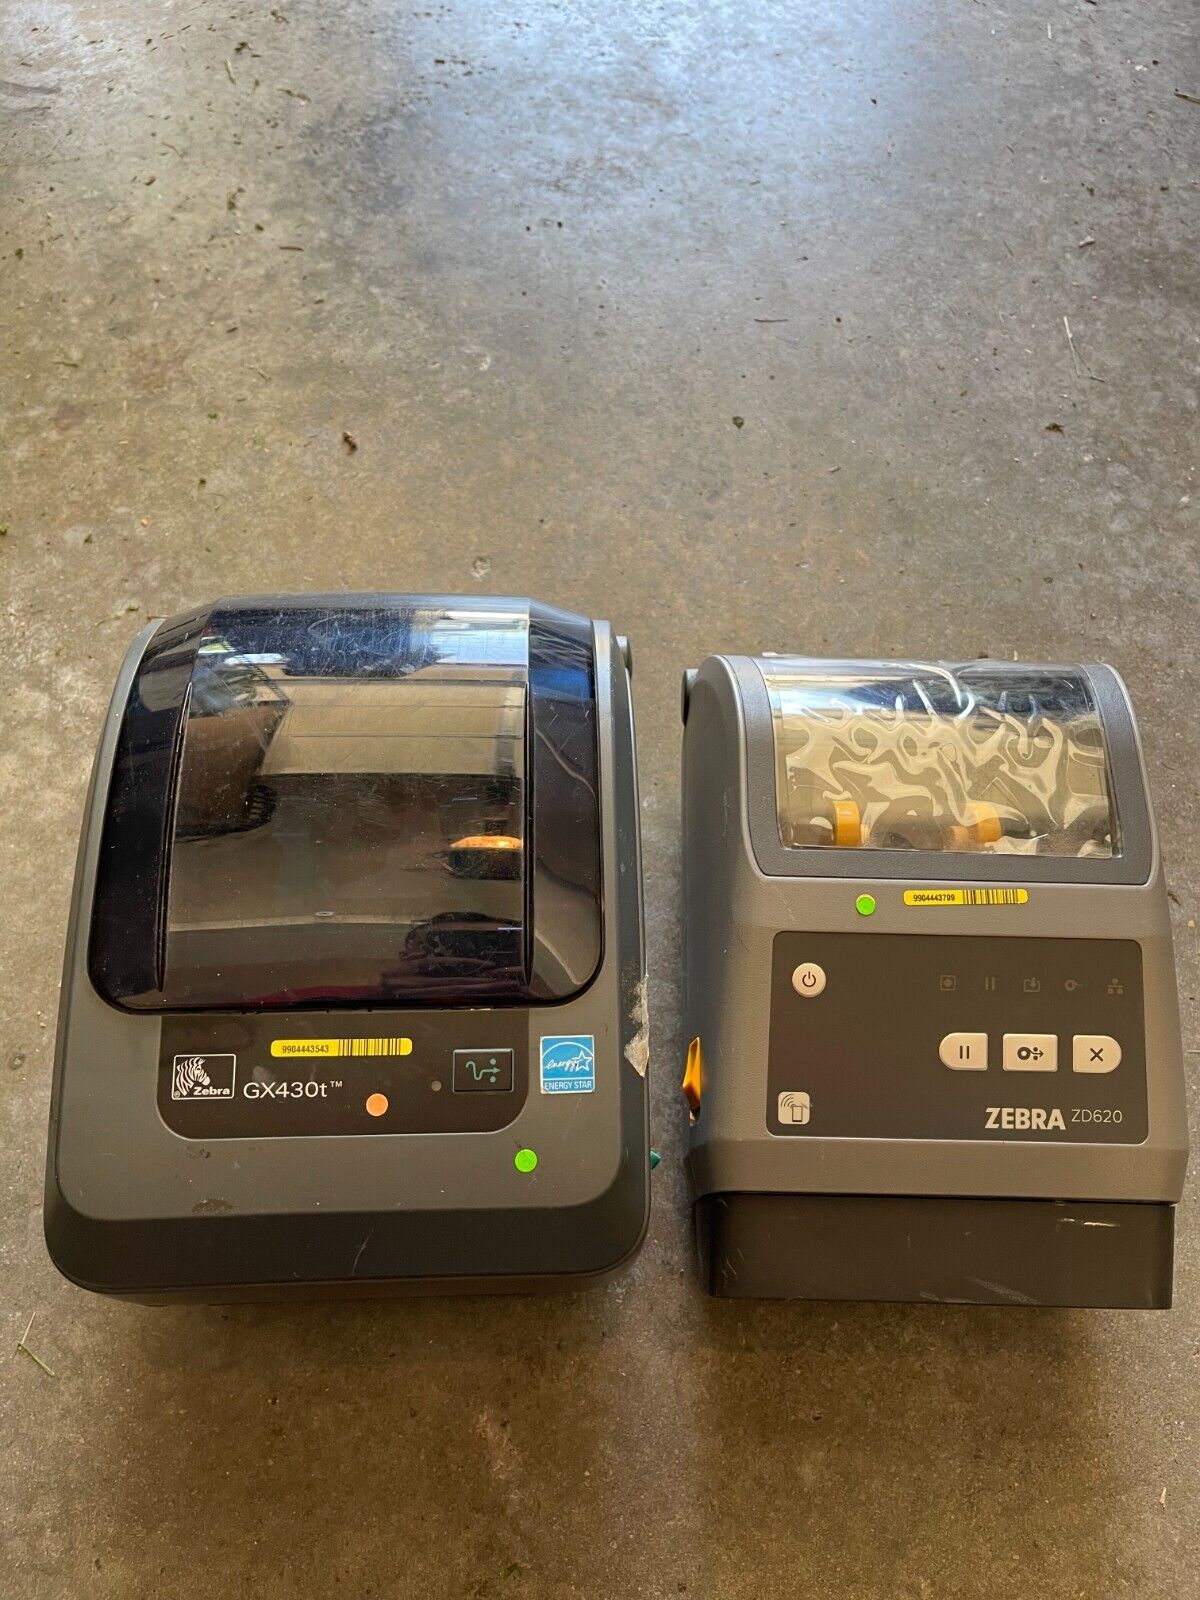 Lot of 2 Zebra Printers, ZD620, GX430t - As Is